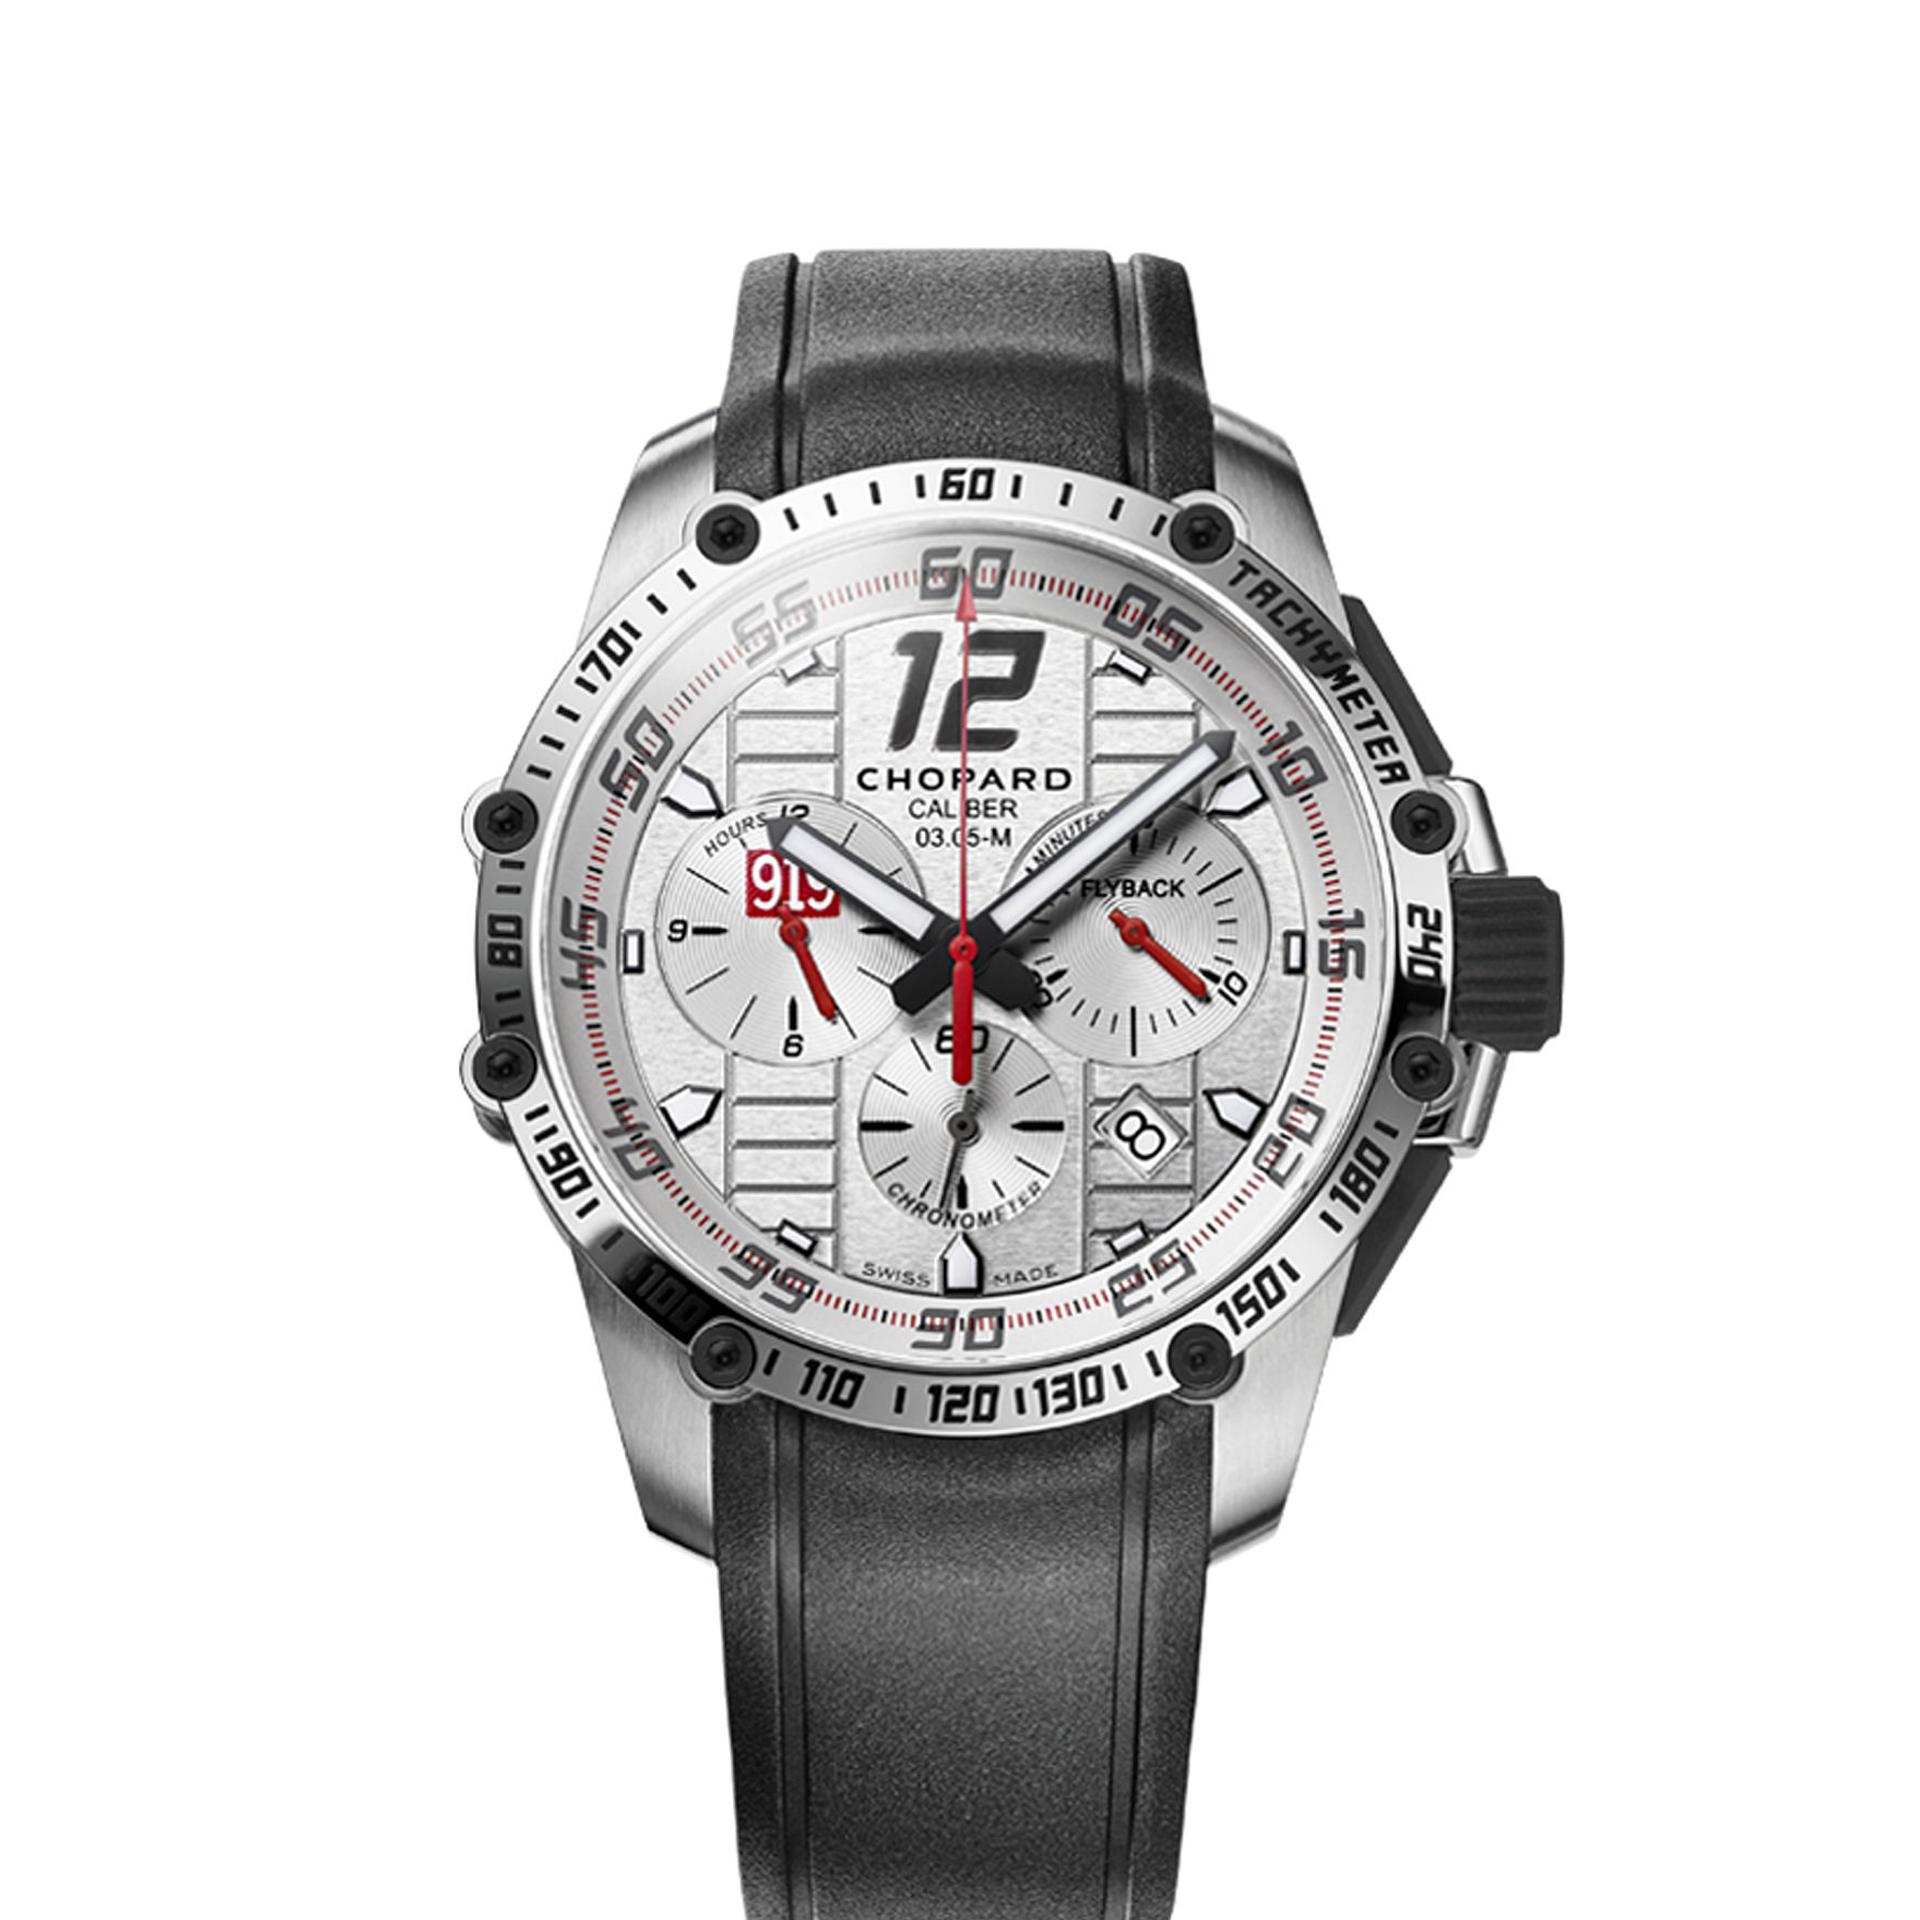 Chopard Superfast Chrono Porsche 919 Edition - Your Watch Hub